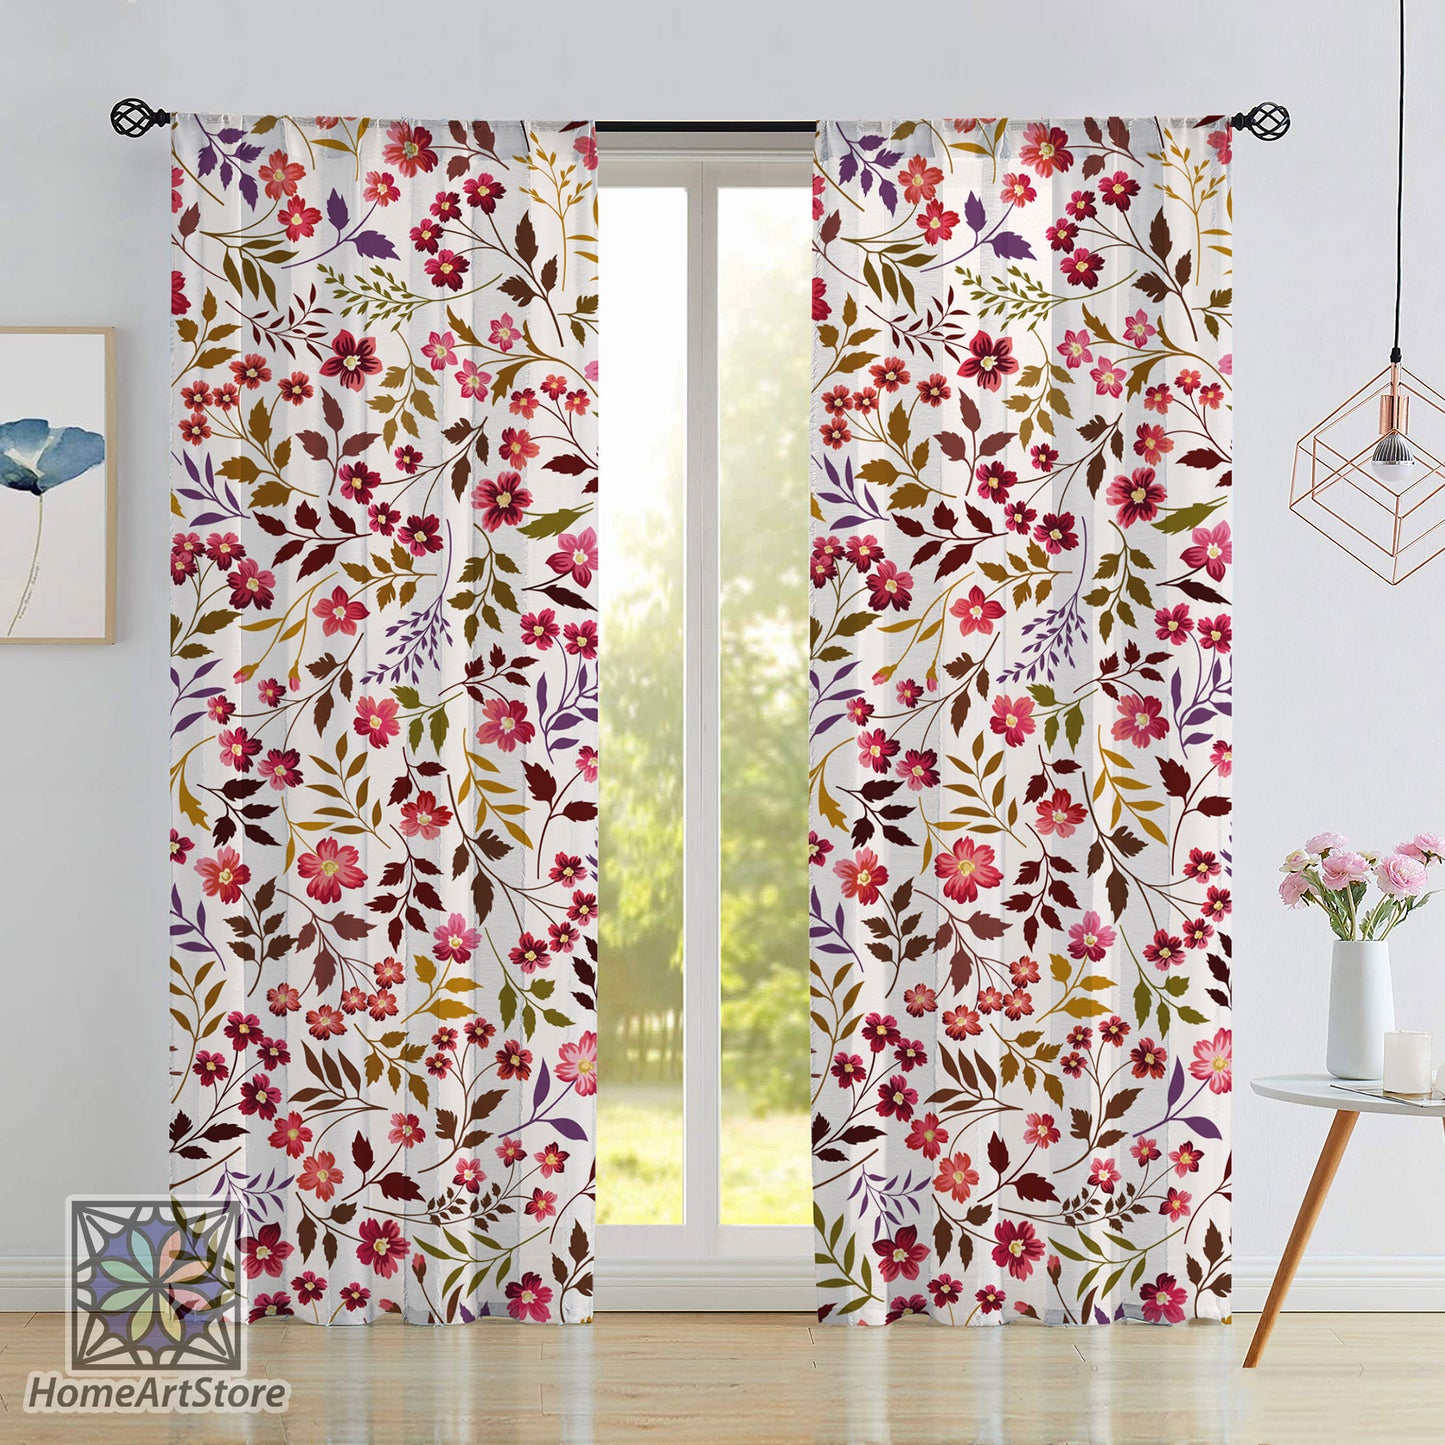 Red Meadow Flower Curtain, Bedroom Curtain, Boho Home Decor, Floral Curtain